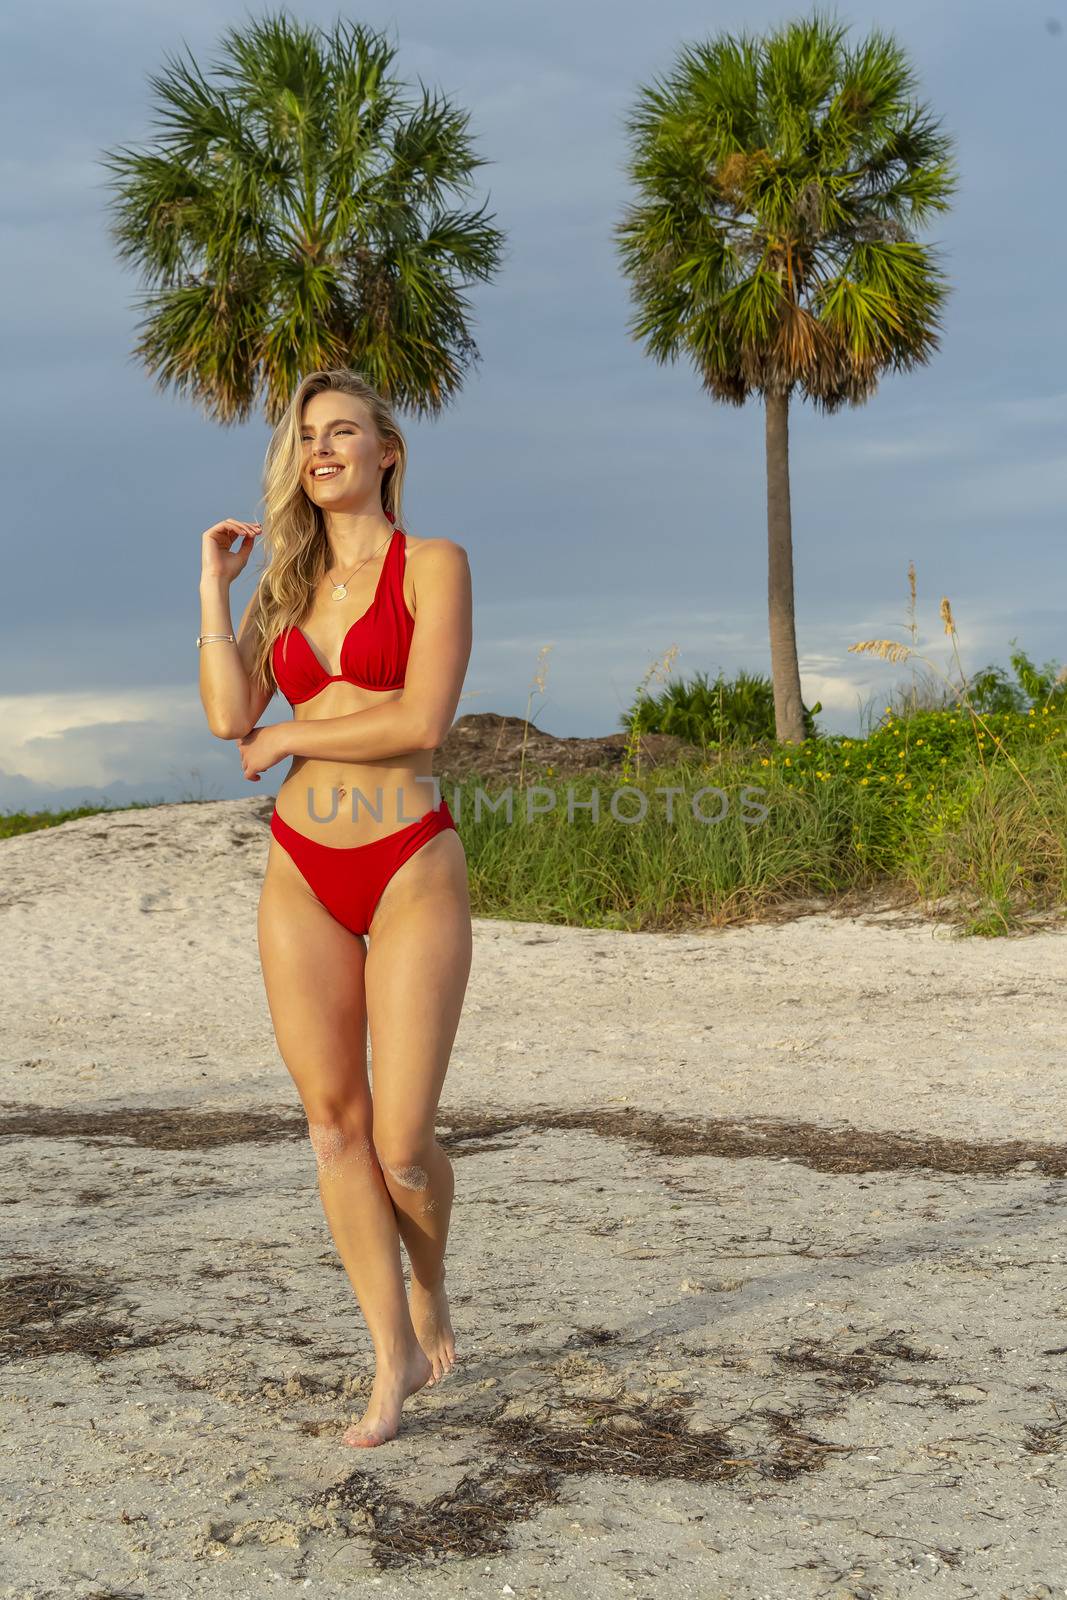 A beautiful blonde bikini model enjoys the weather outdoors on the beach